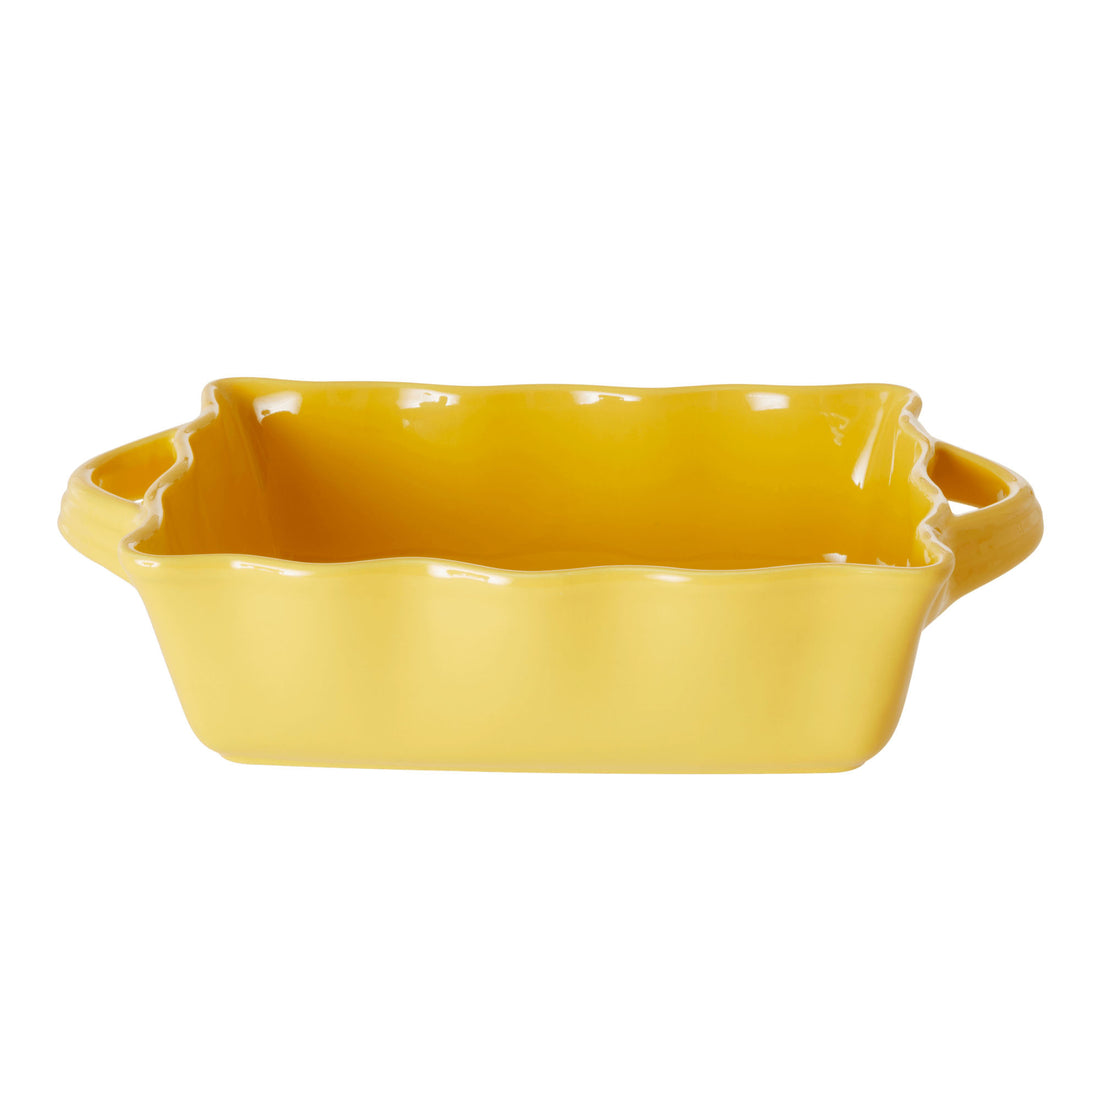 rice-dk-stoneware-oven-dish-in-yellow-medium-rice-ceove-my-01